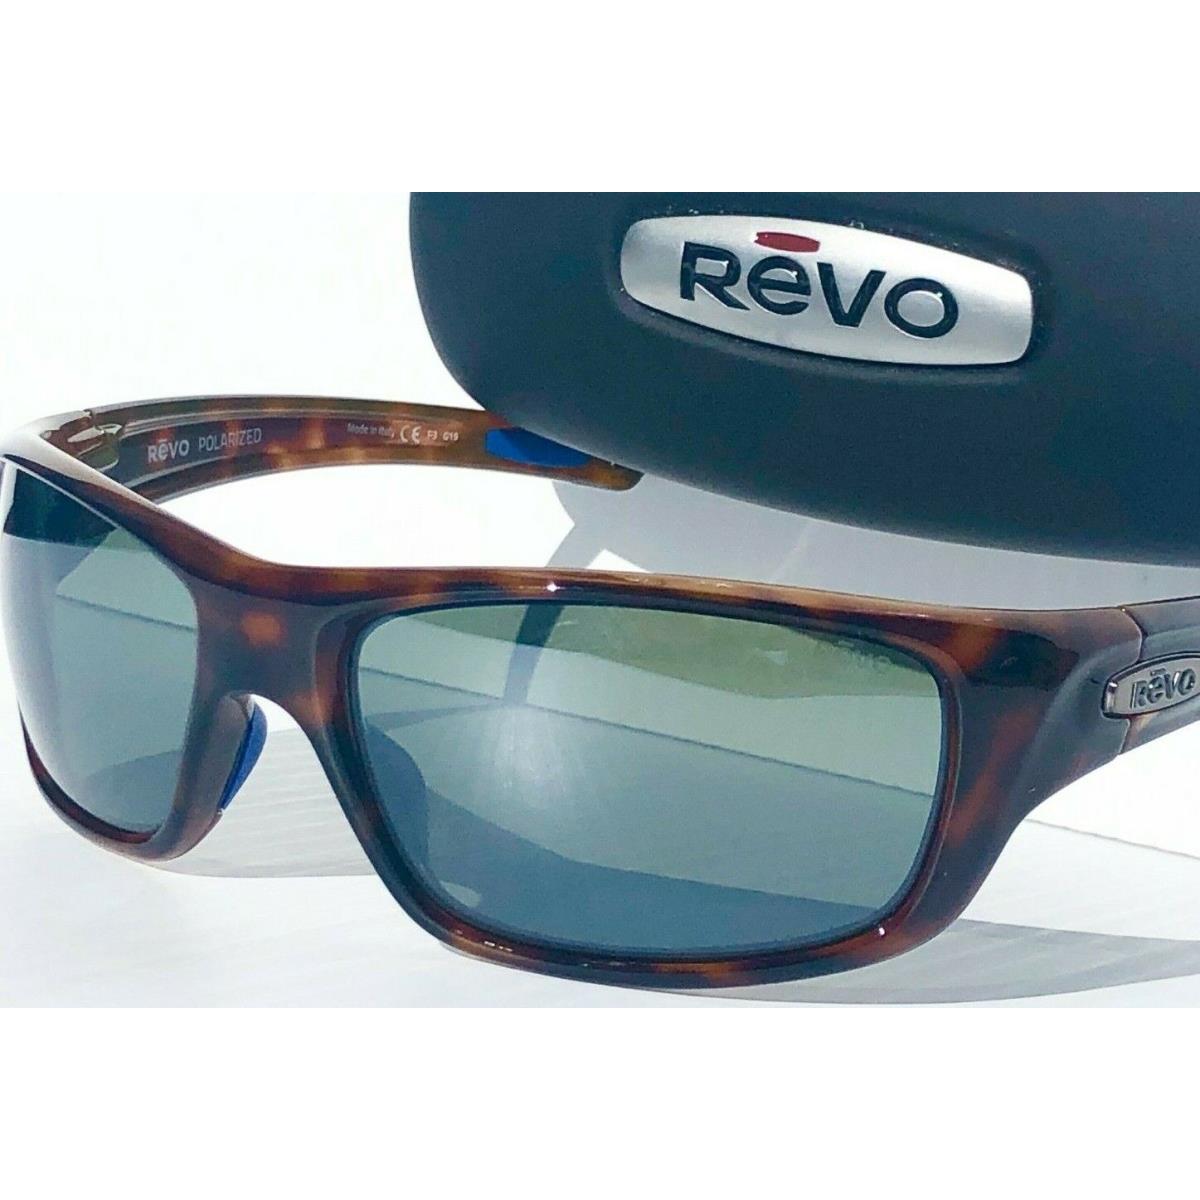 Revo Jasper Tortoise Polarized Smoky Green Glass Sunglasses 1111 02 SG50